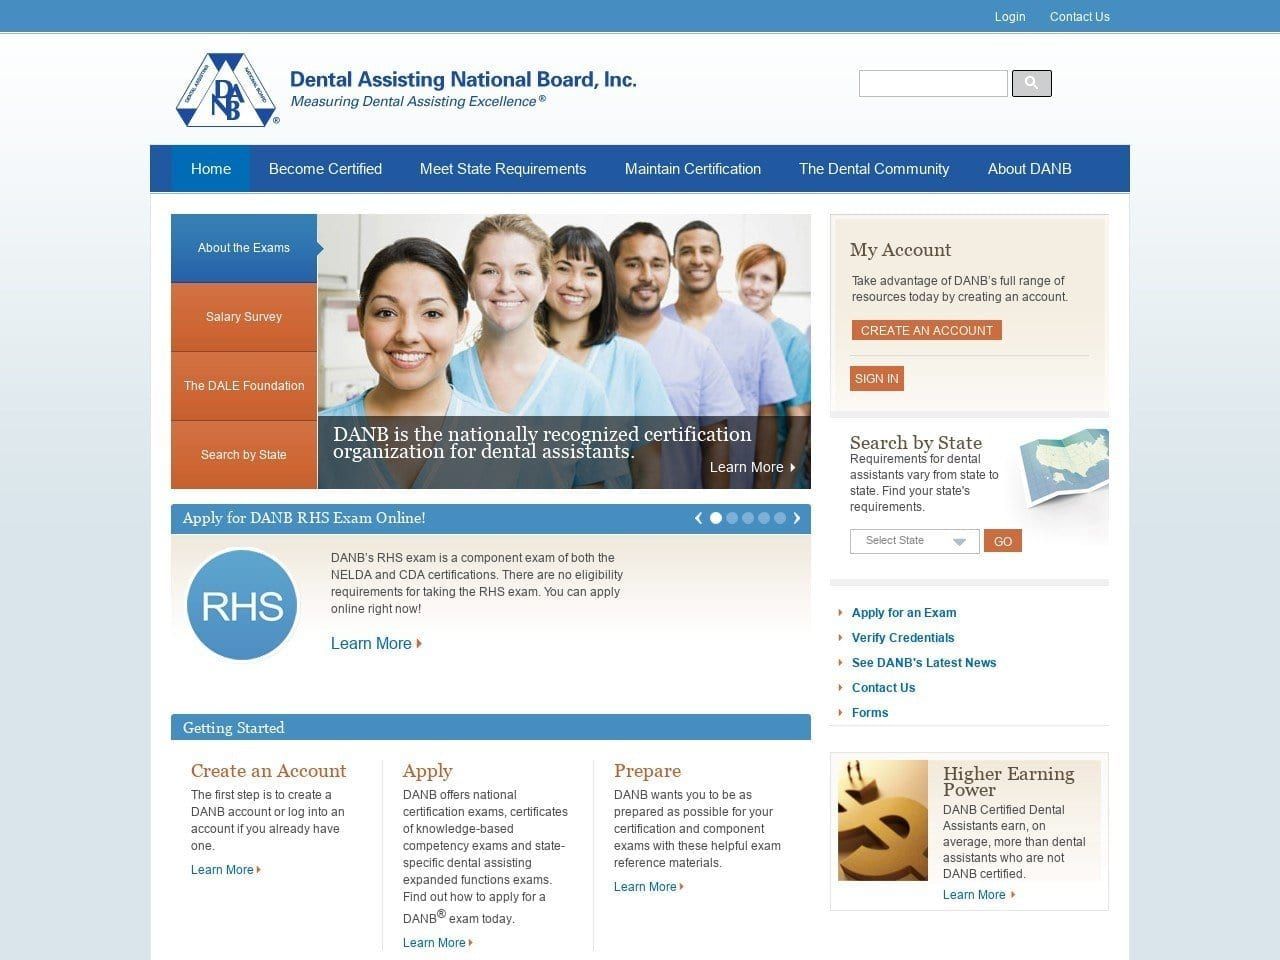 Dental Assisting National Board Website Screenshot from danb.org